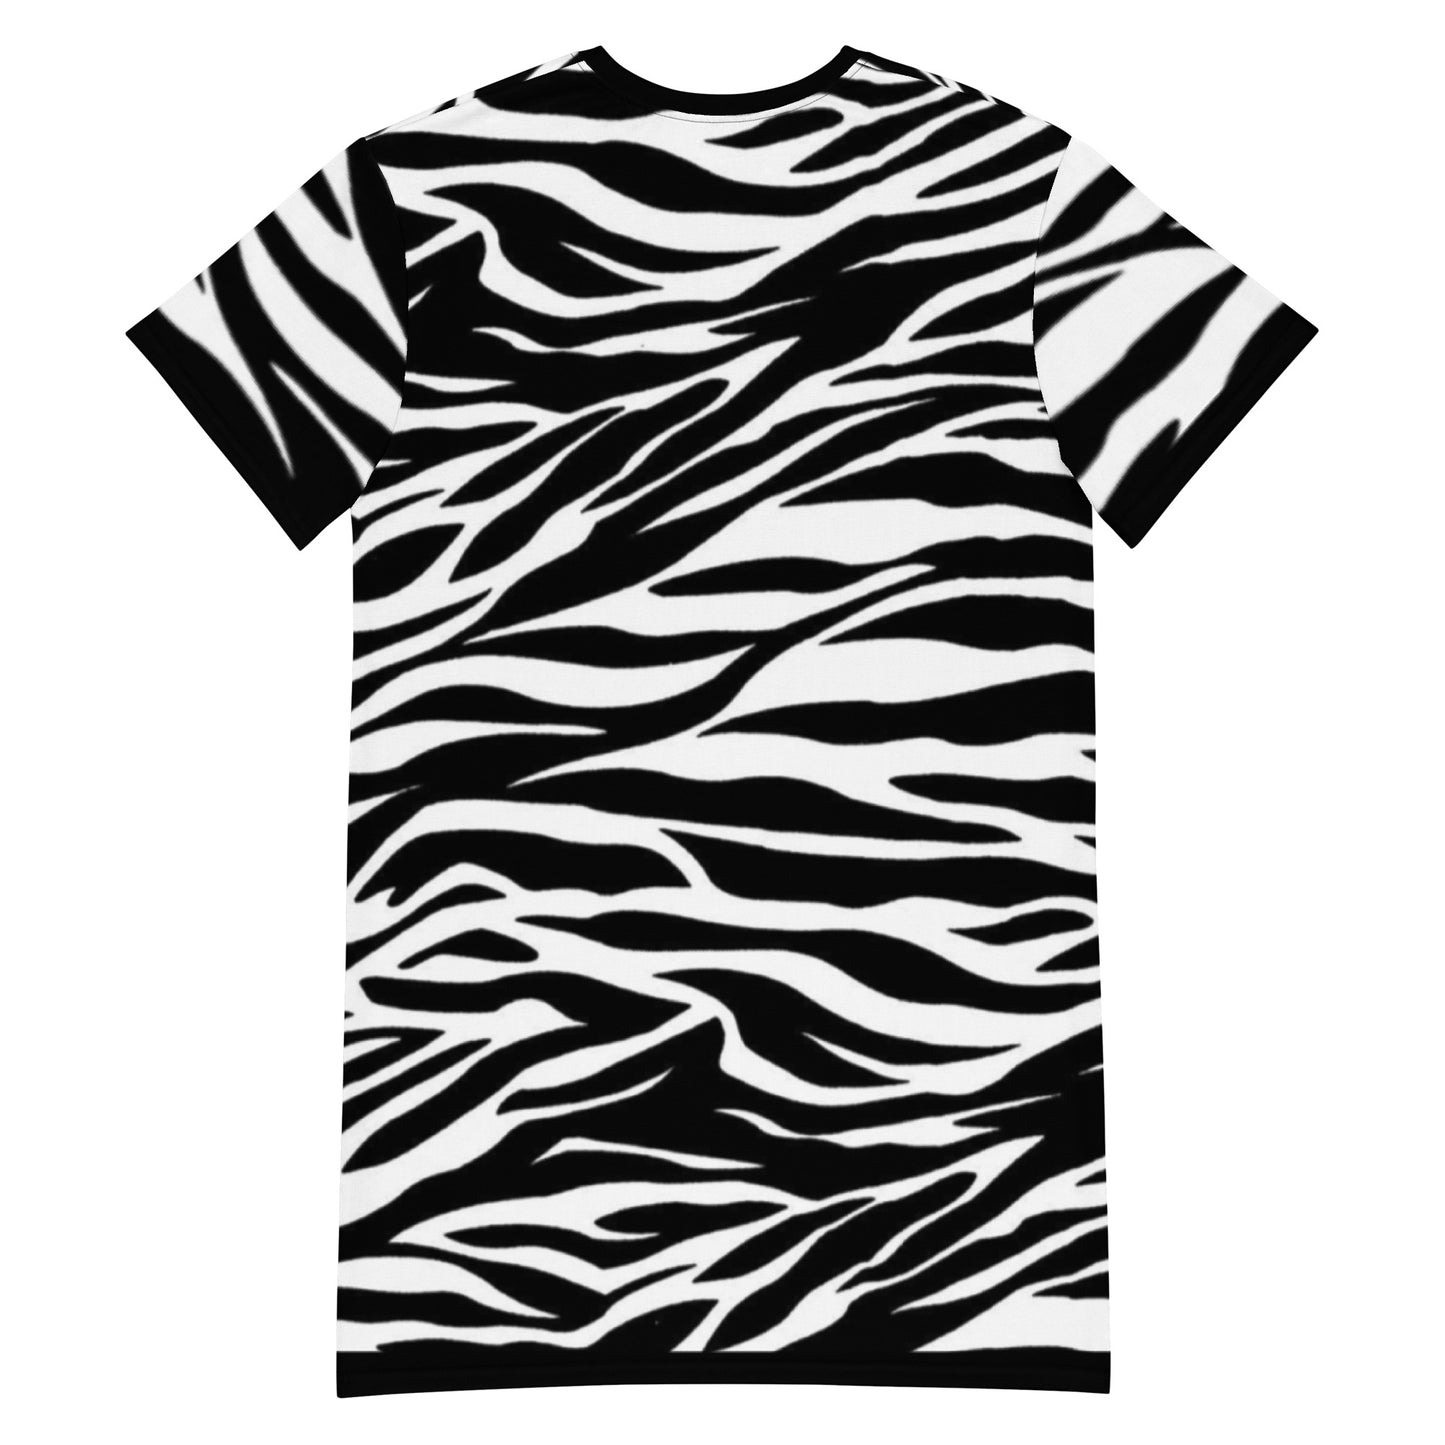 ZEBRA PRINT T-shirt dress